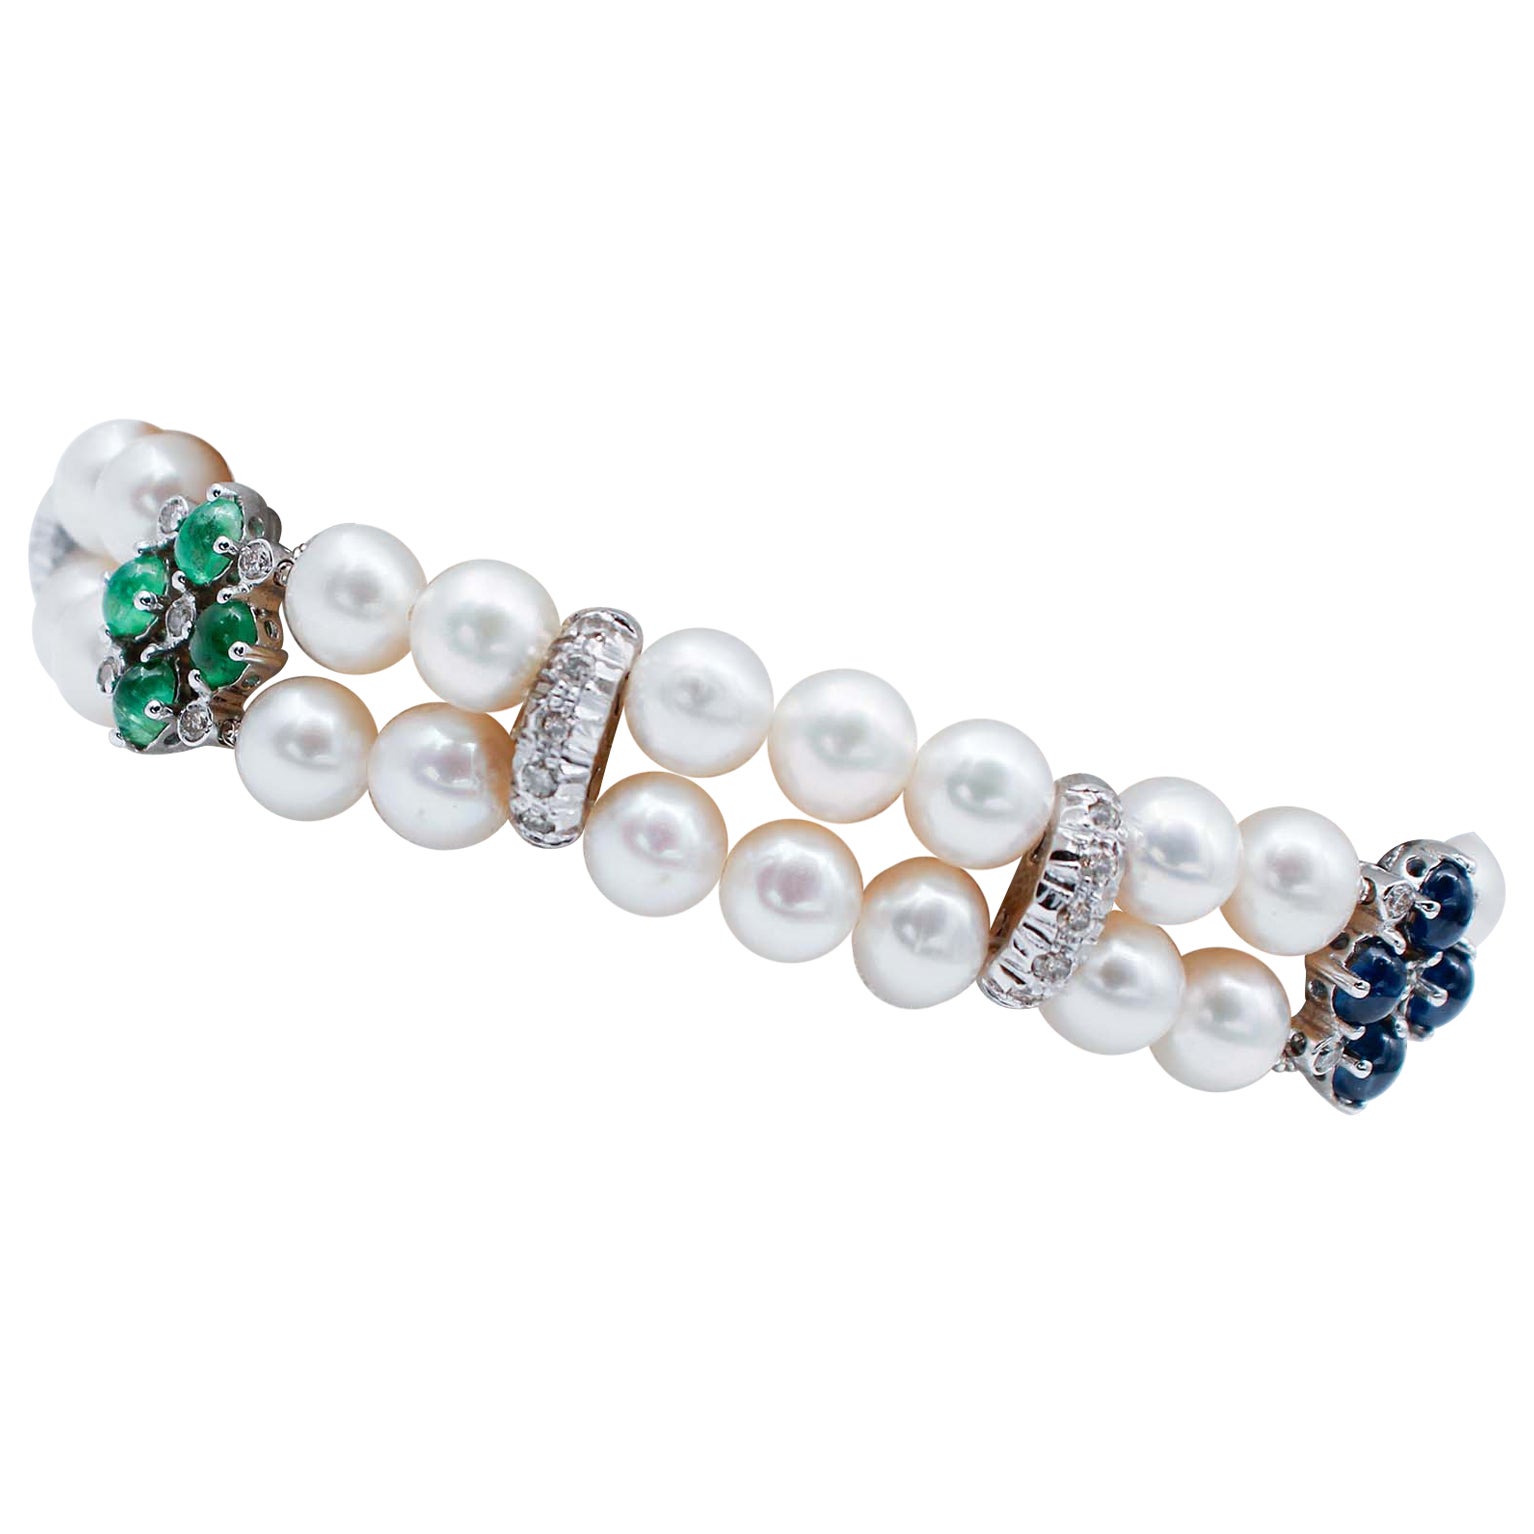 Sapphires, Emeralds, Rubies, Diamonds, Pearls, 14 Kt White Gold Beaded Bracelet